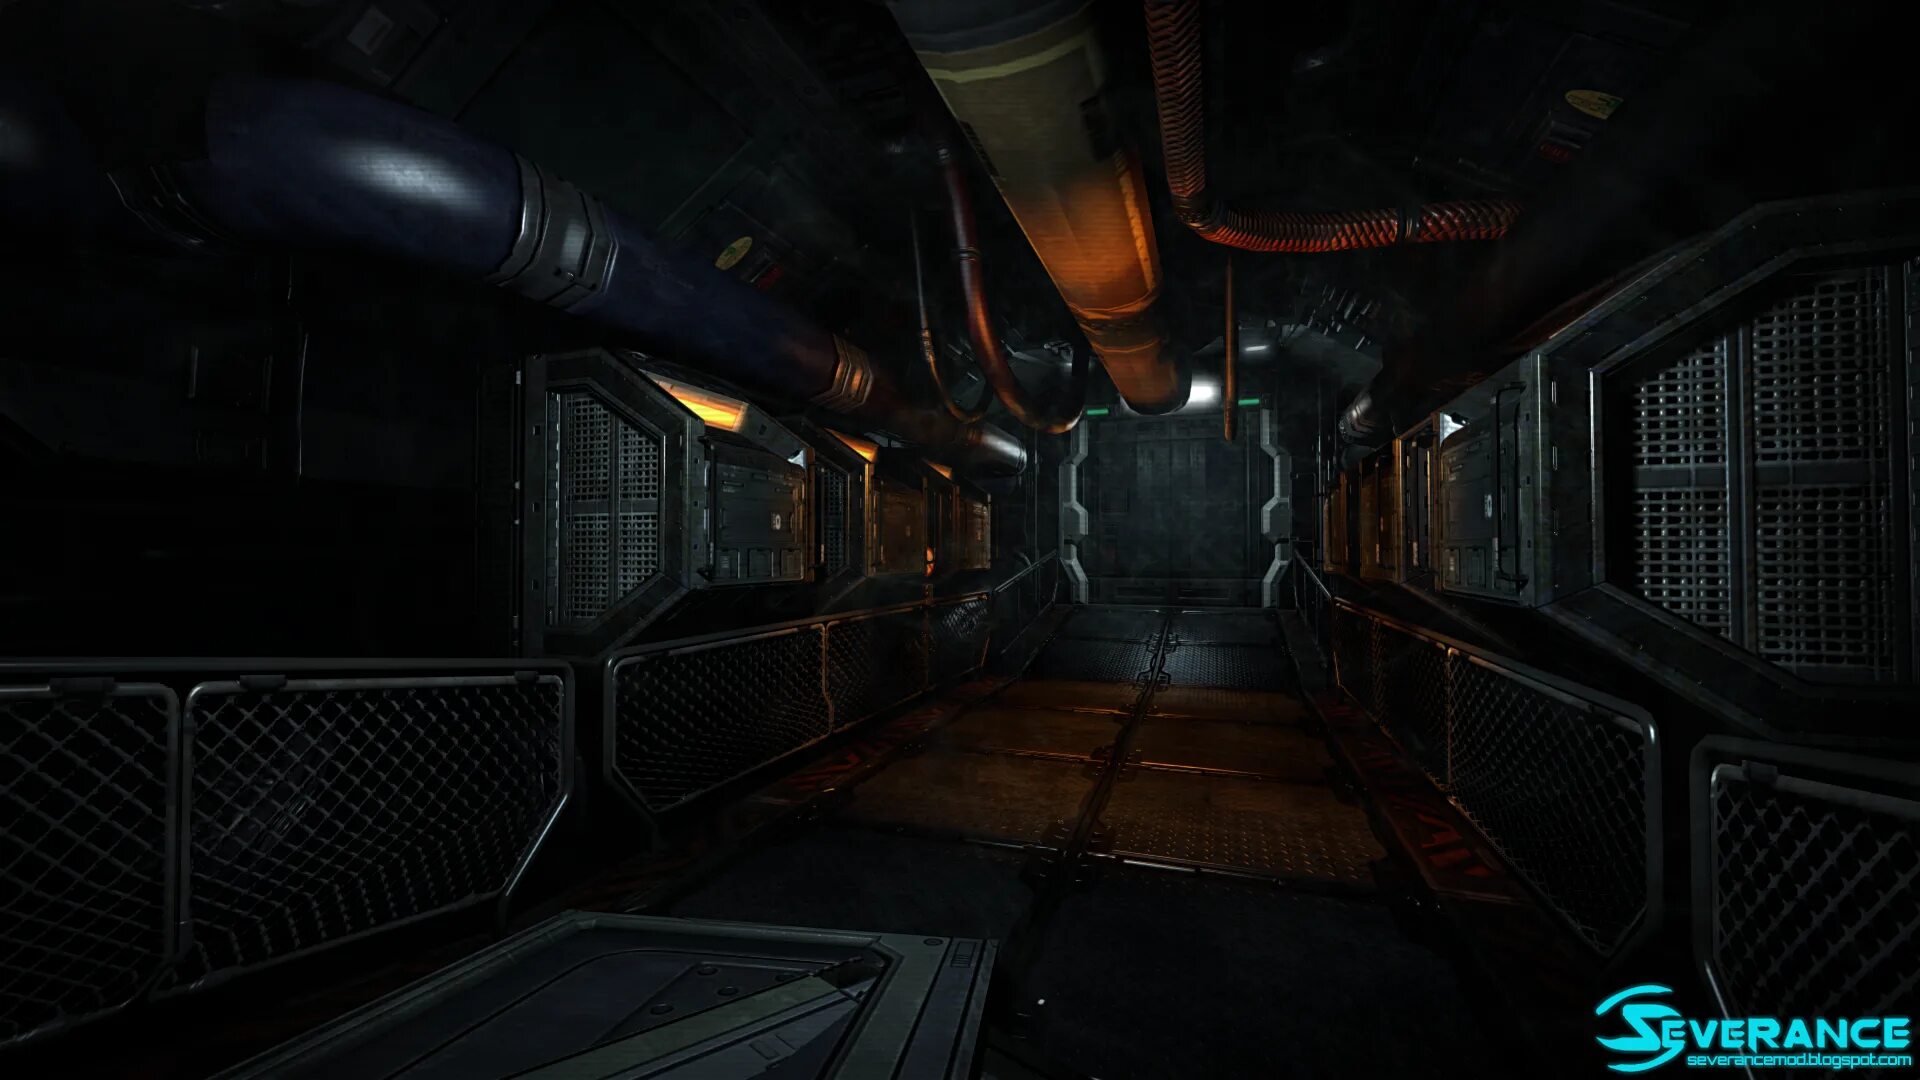 3 corridors. Doom 3 Corridor. Doom 3 коридоры. Doom 3 Remastered на Unreal engine 4. Дум 3 коридоры токамака.